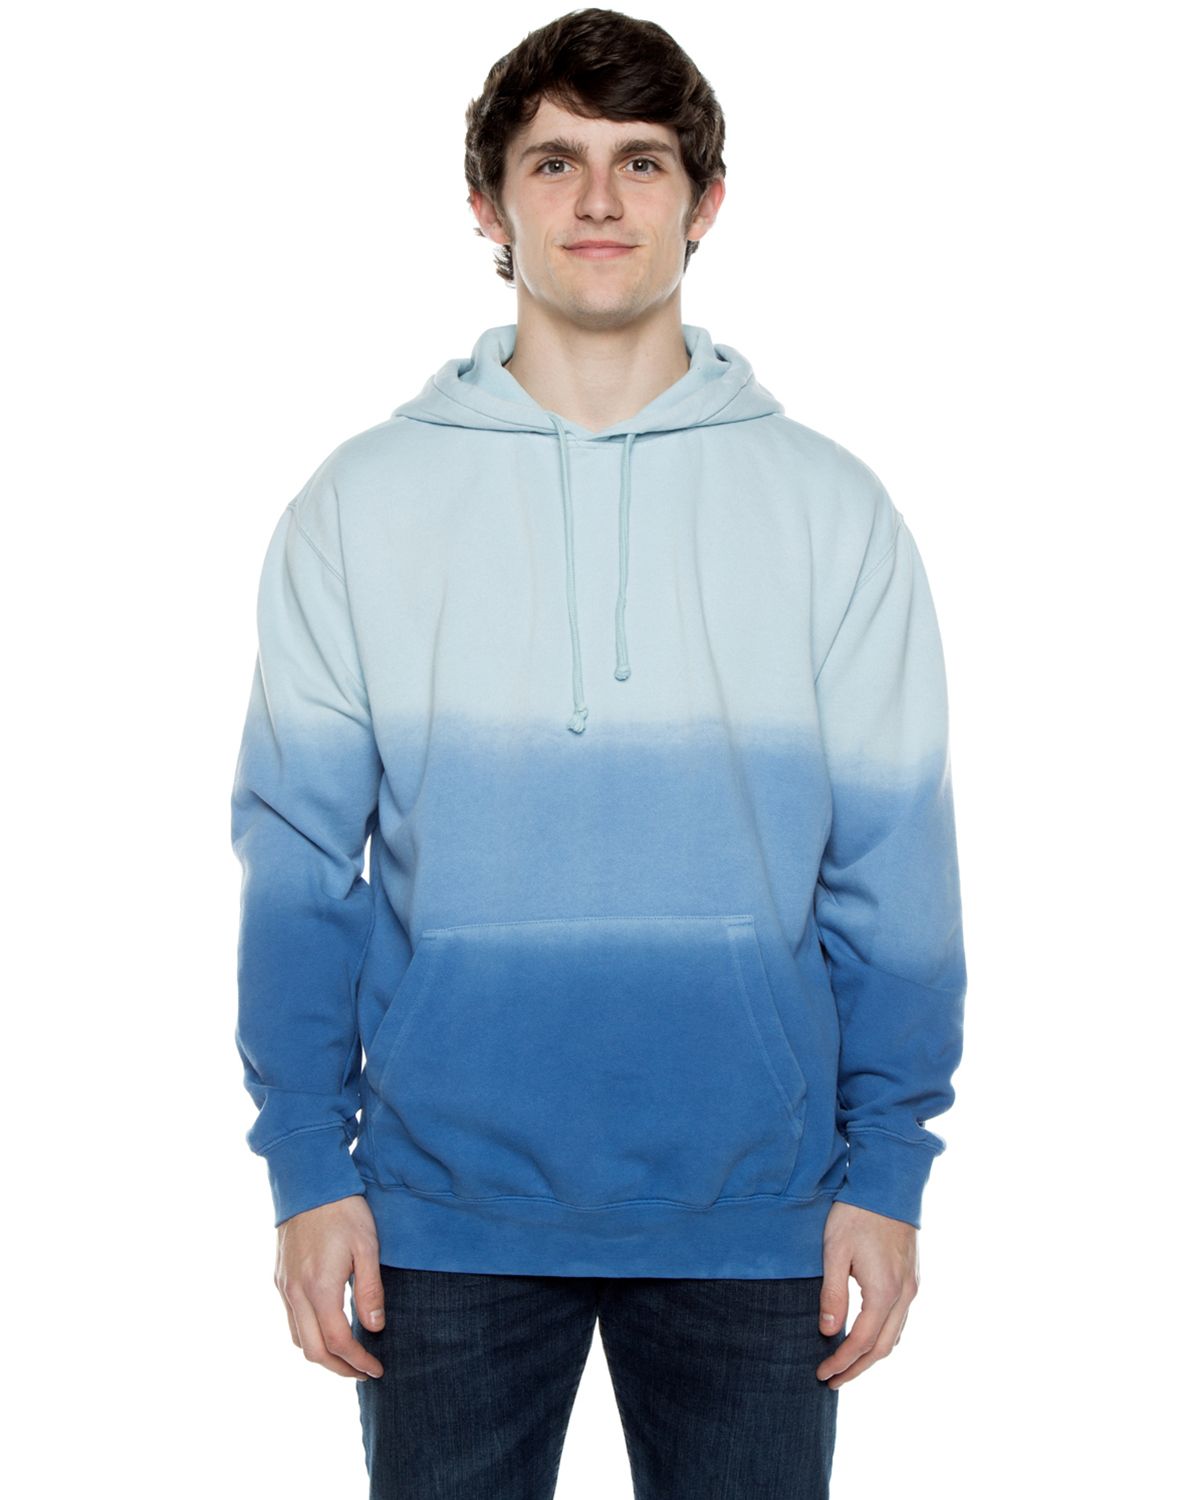 Beimar PD102RD Unisex 8.25 oz Pigment-Dyed Hooded Sweatshirt